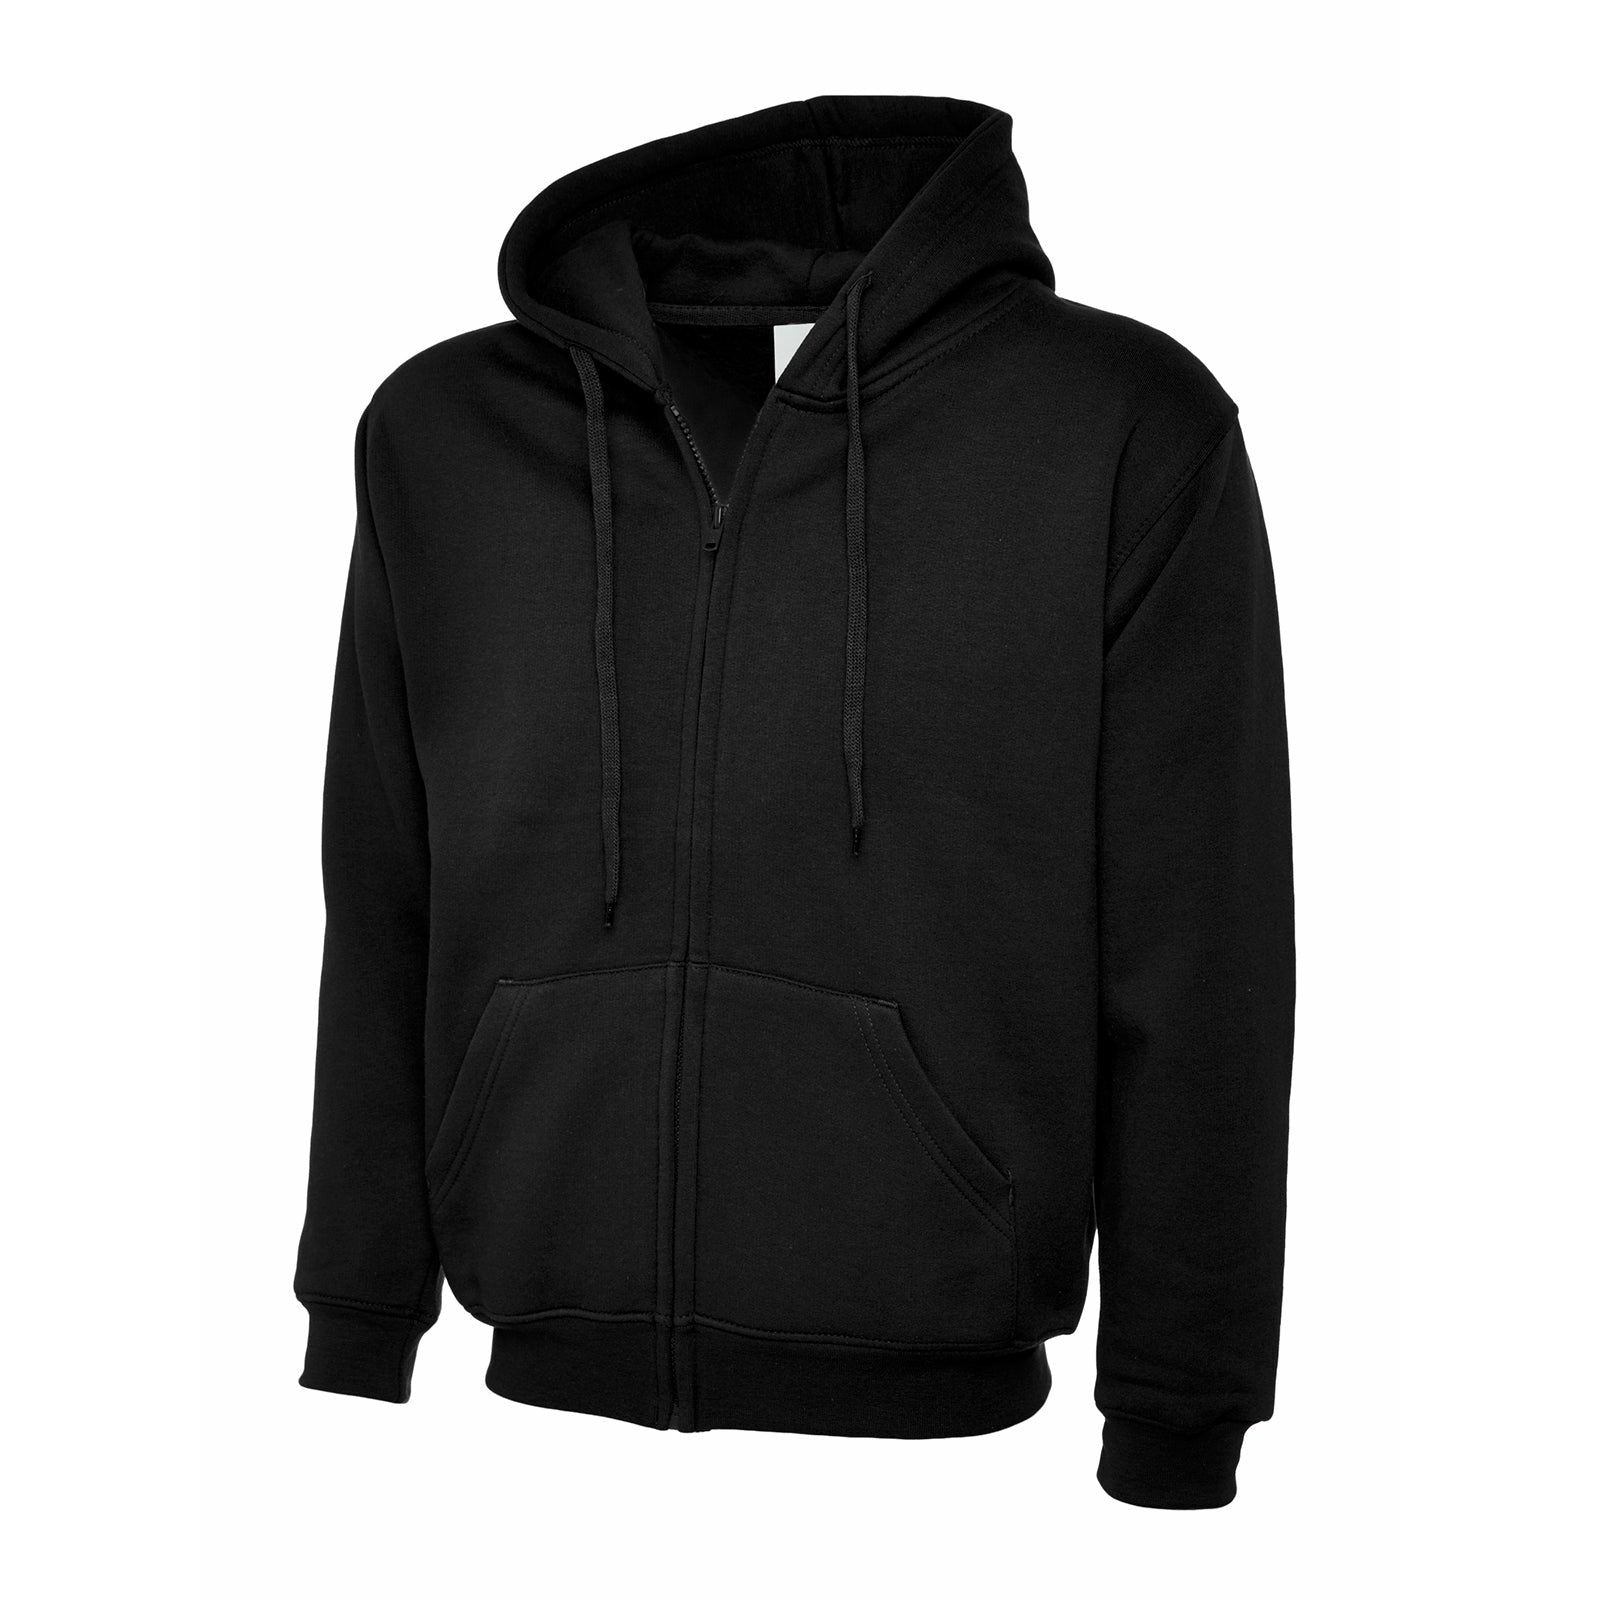 Adults Classic Full Zip Hooded Sweatshirt Black